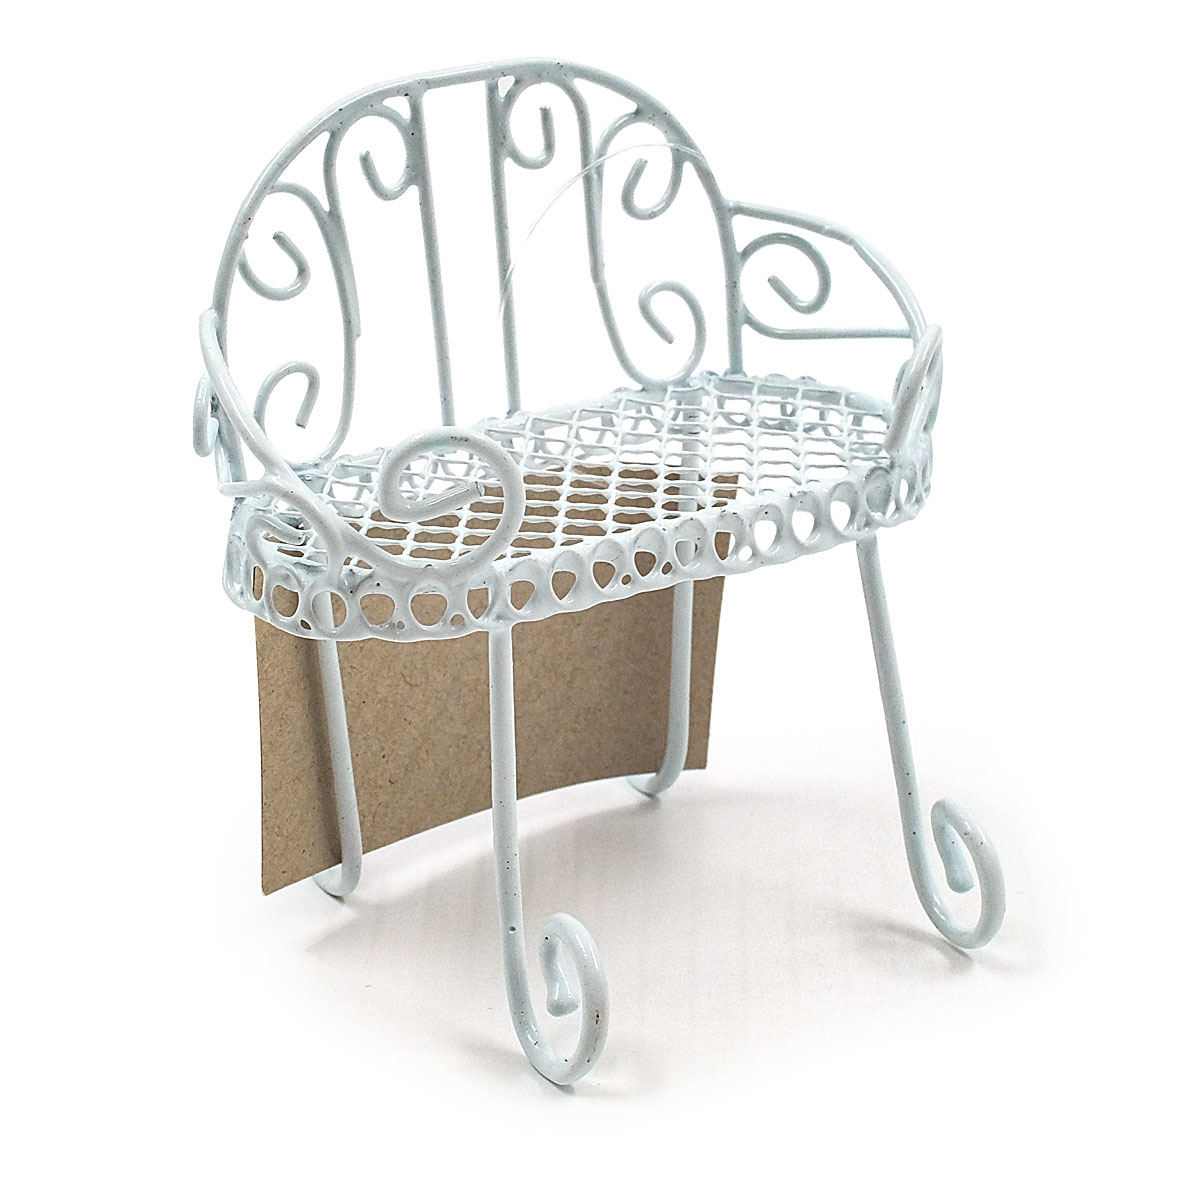 Мебель для куклы Астра металлический мини стул, белый KB3135 мебель для куклы астра металлический мини стул коричневый